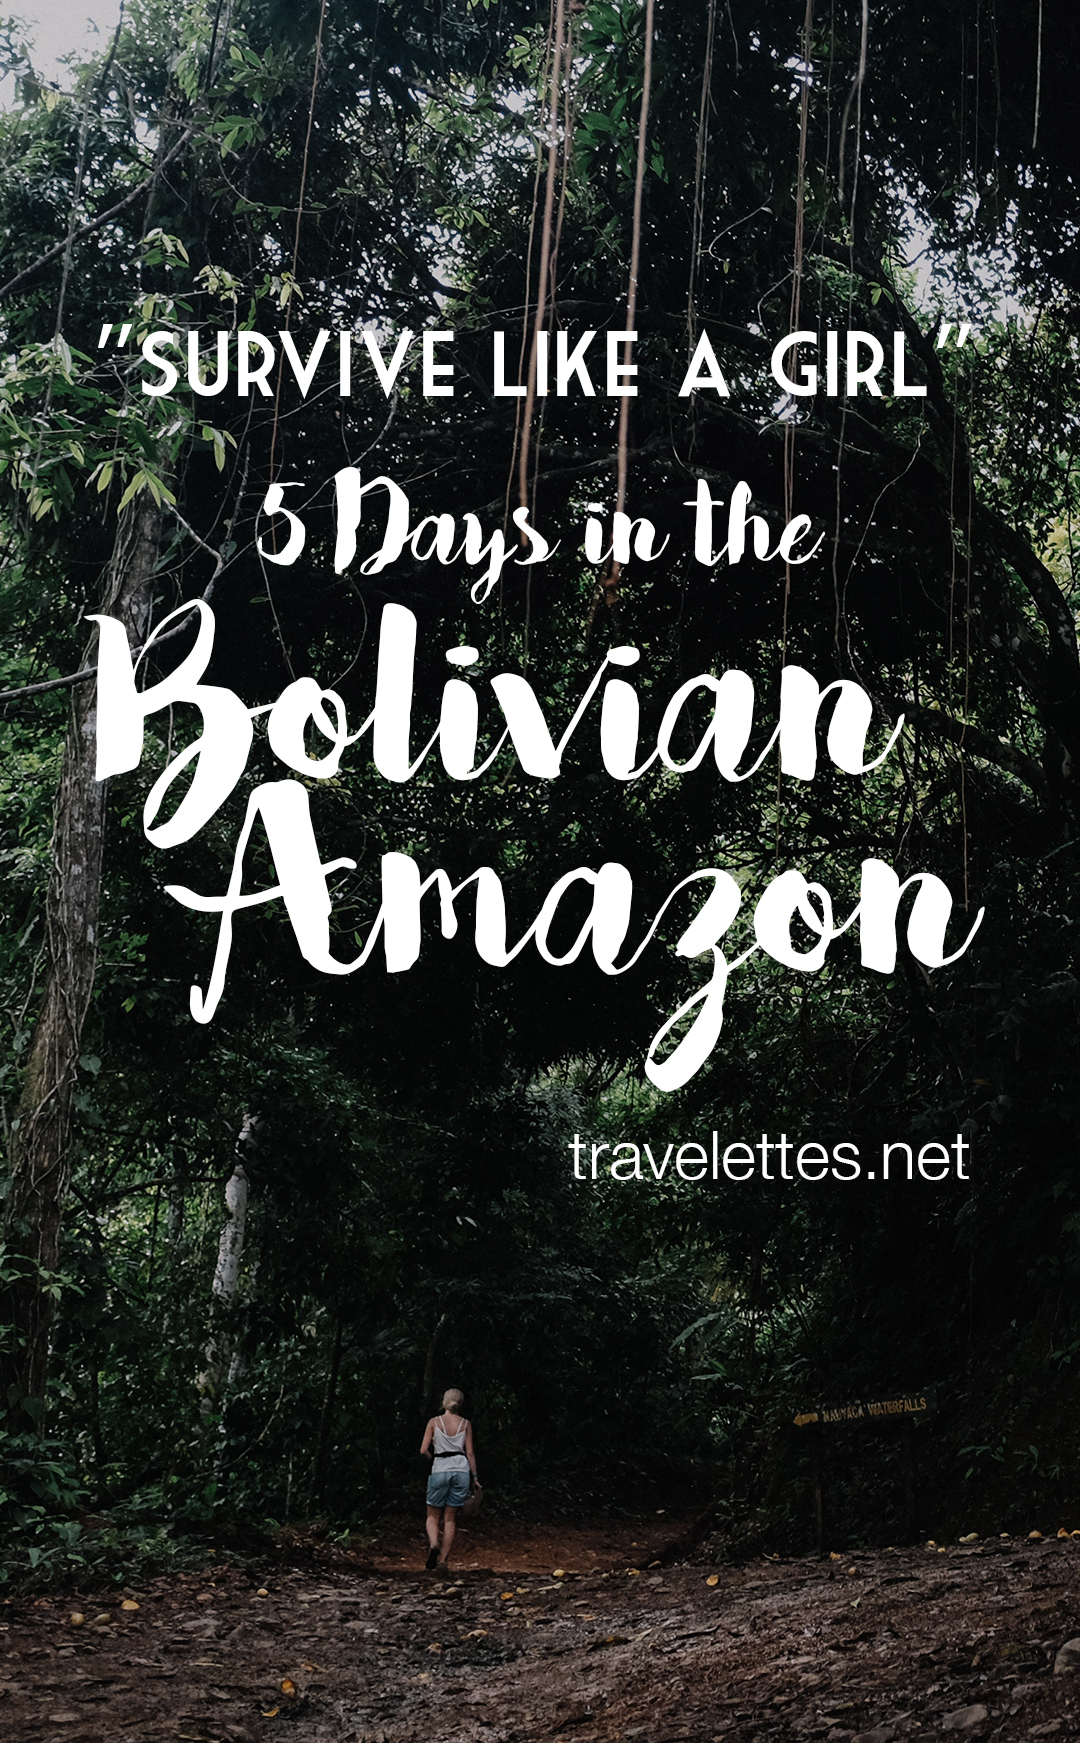 girl amazon survival